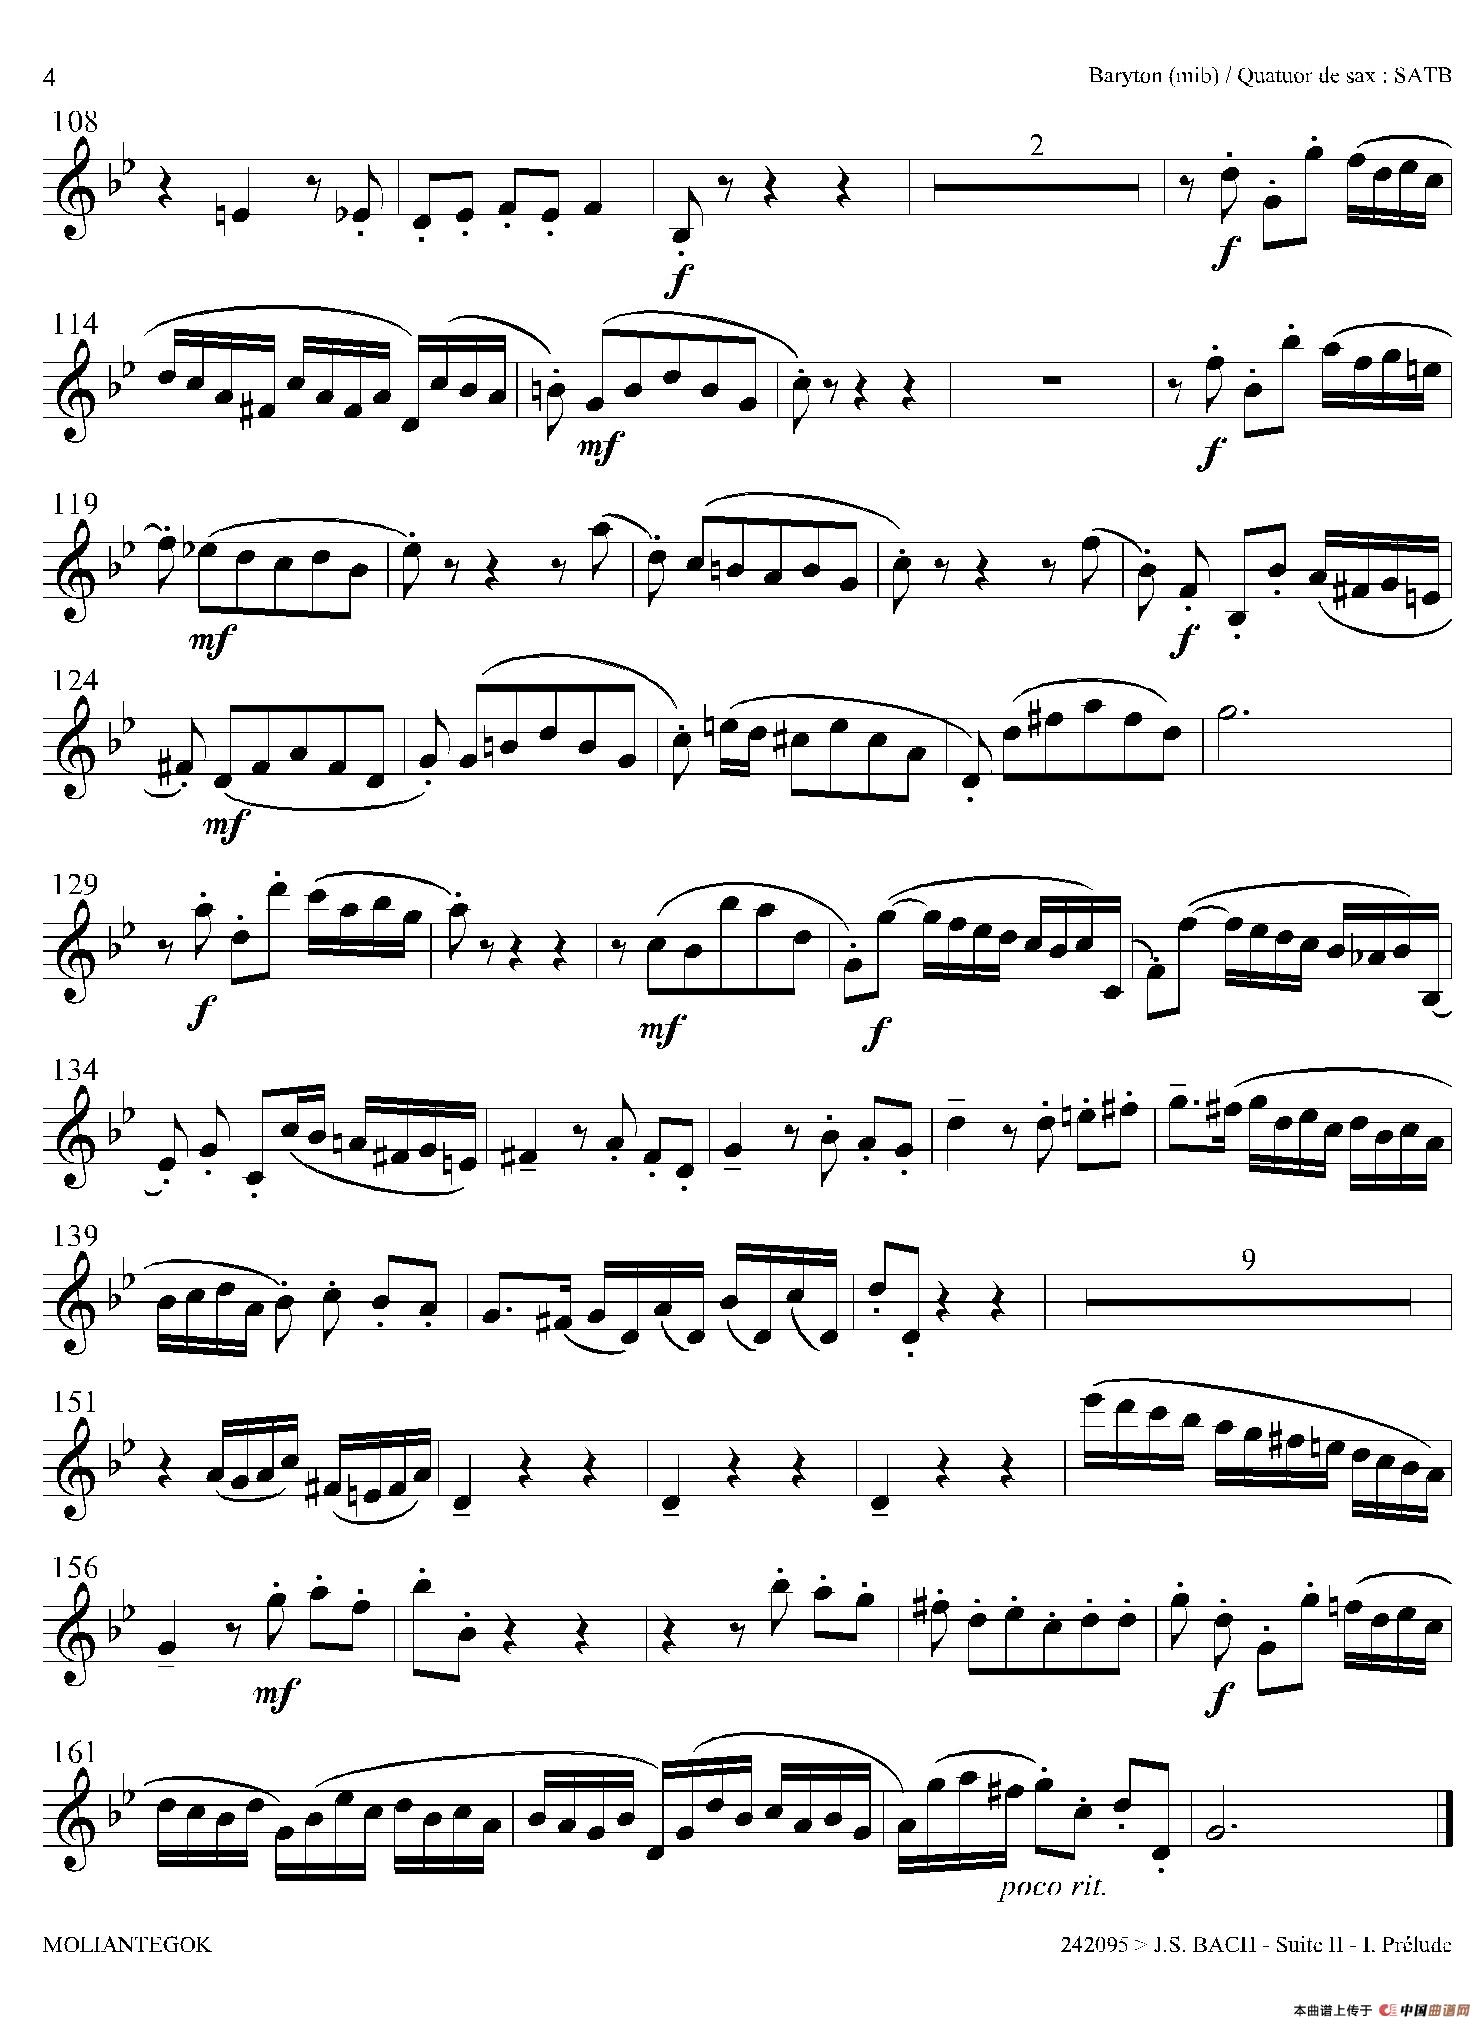 Suite anglaise No 2,BWV 807（法国组曲之二·前奏曲）（